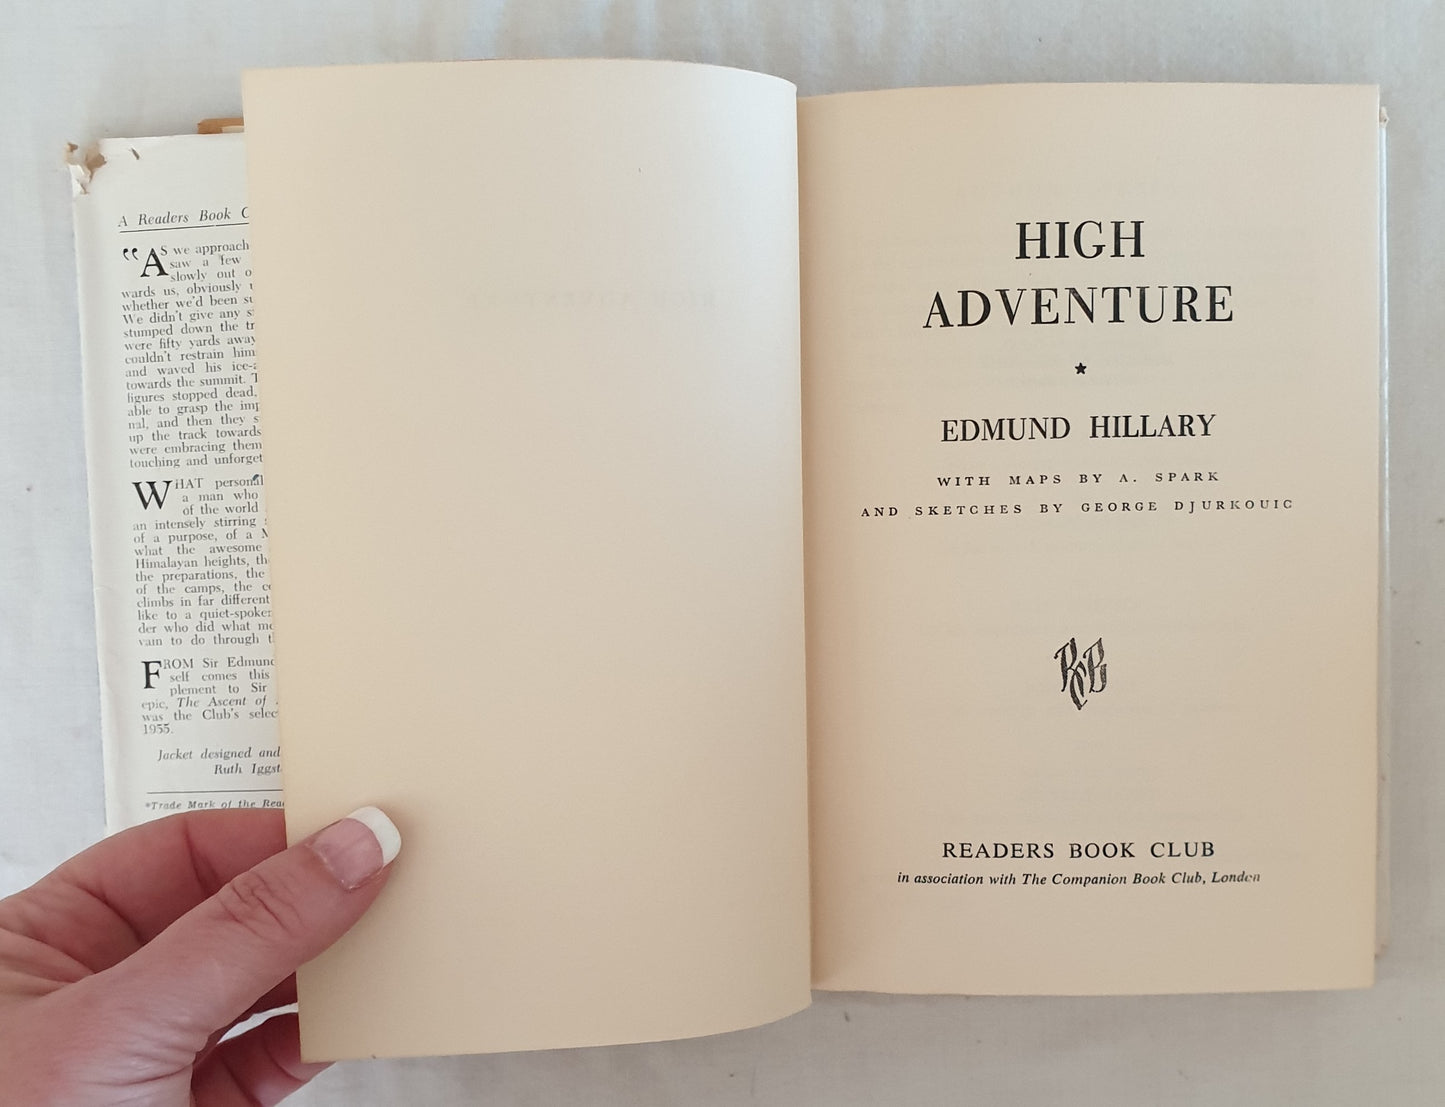 High Adventure by Edmund Hillary